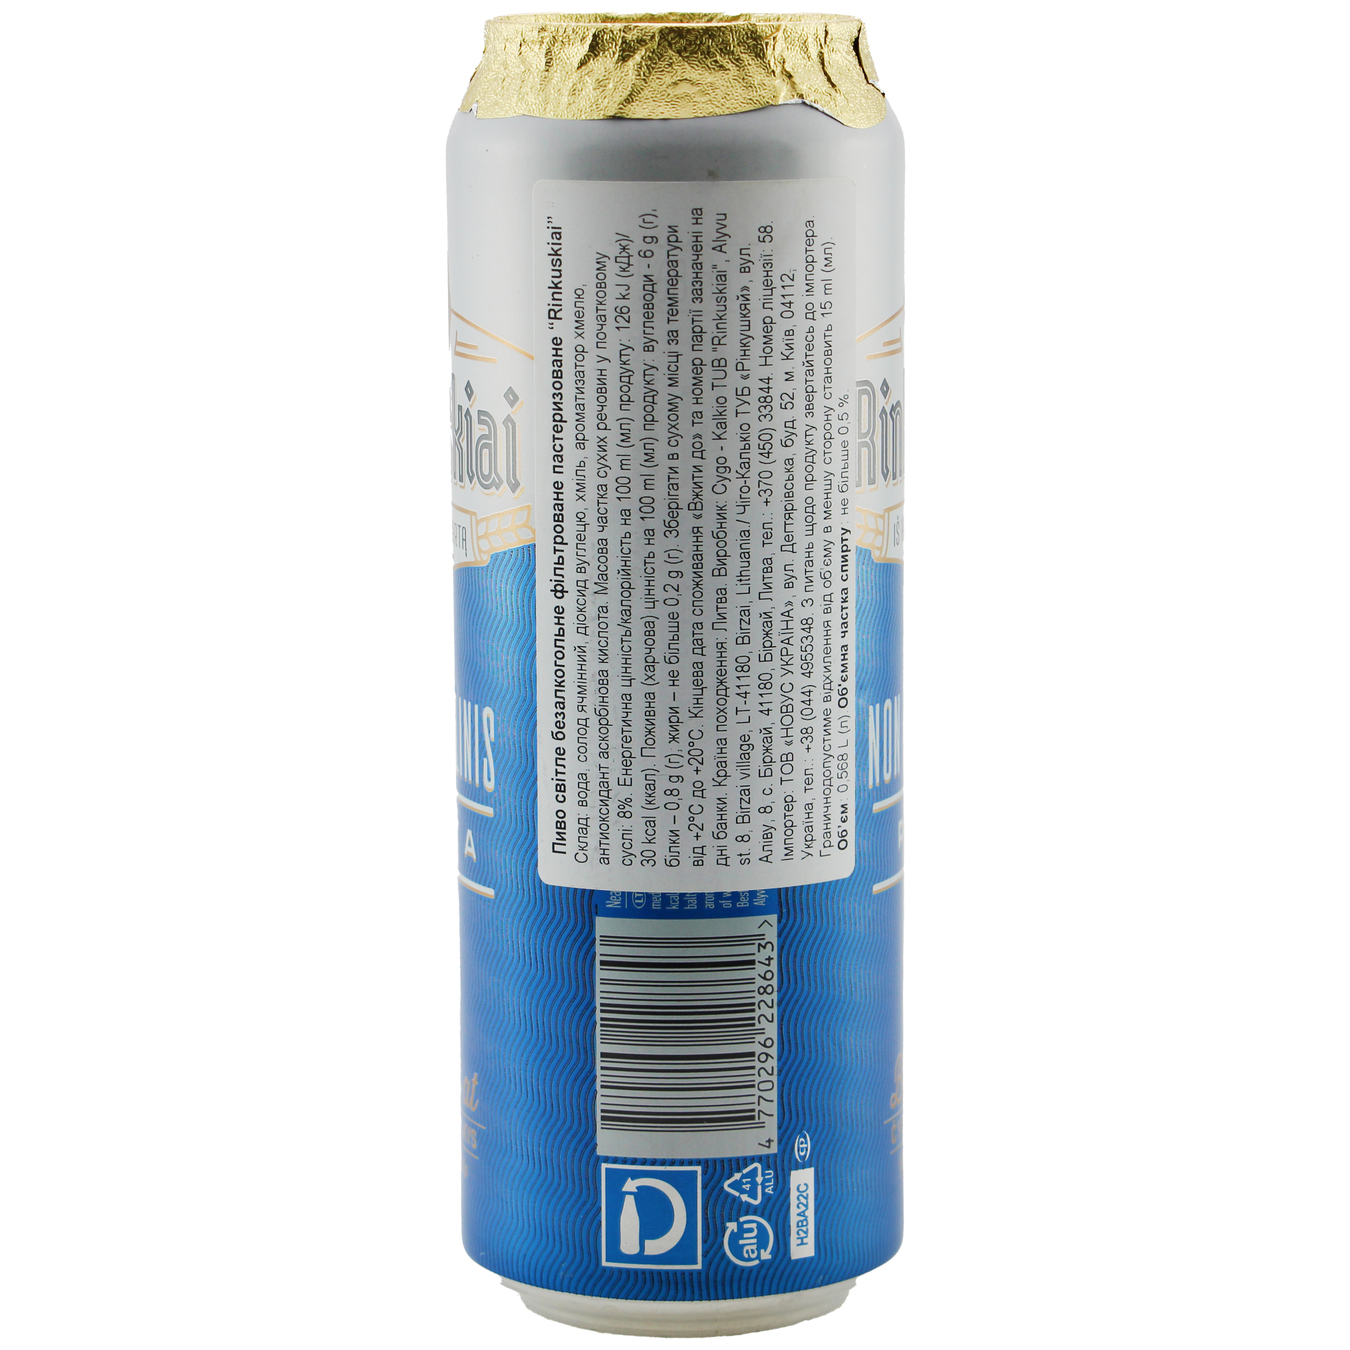 Rinkuskiu non-alcoholic light beer 0,5% 0,5l 2